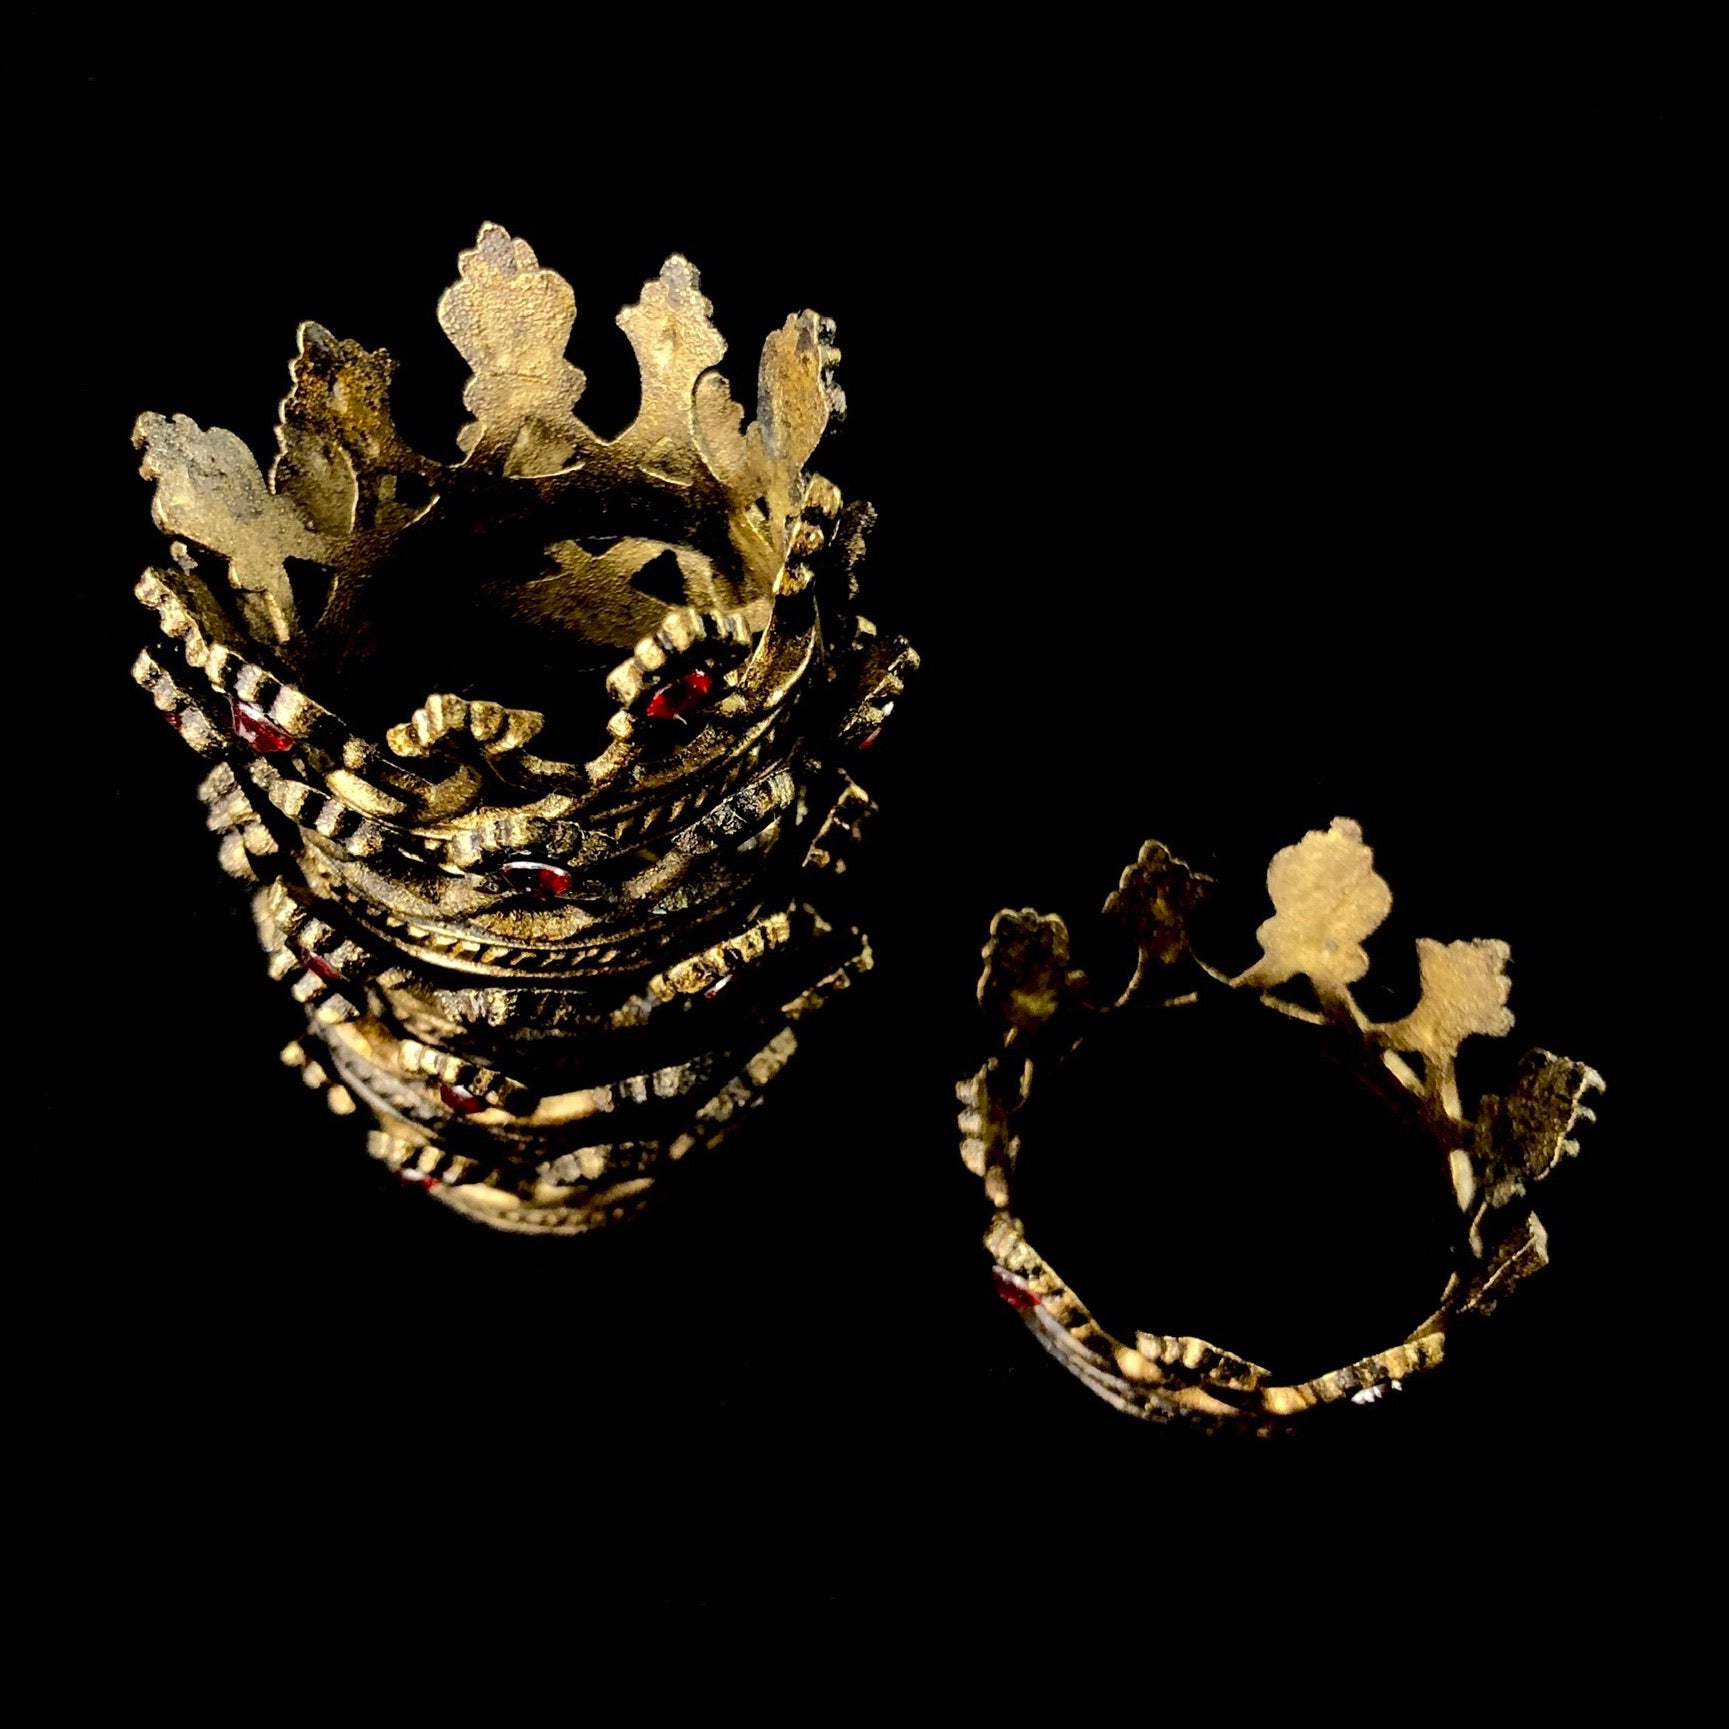 Golden Brass Crown For Saints 14 cm